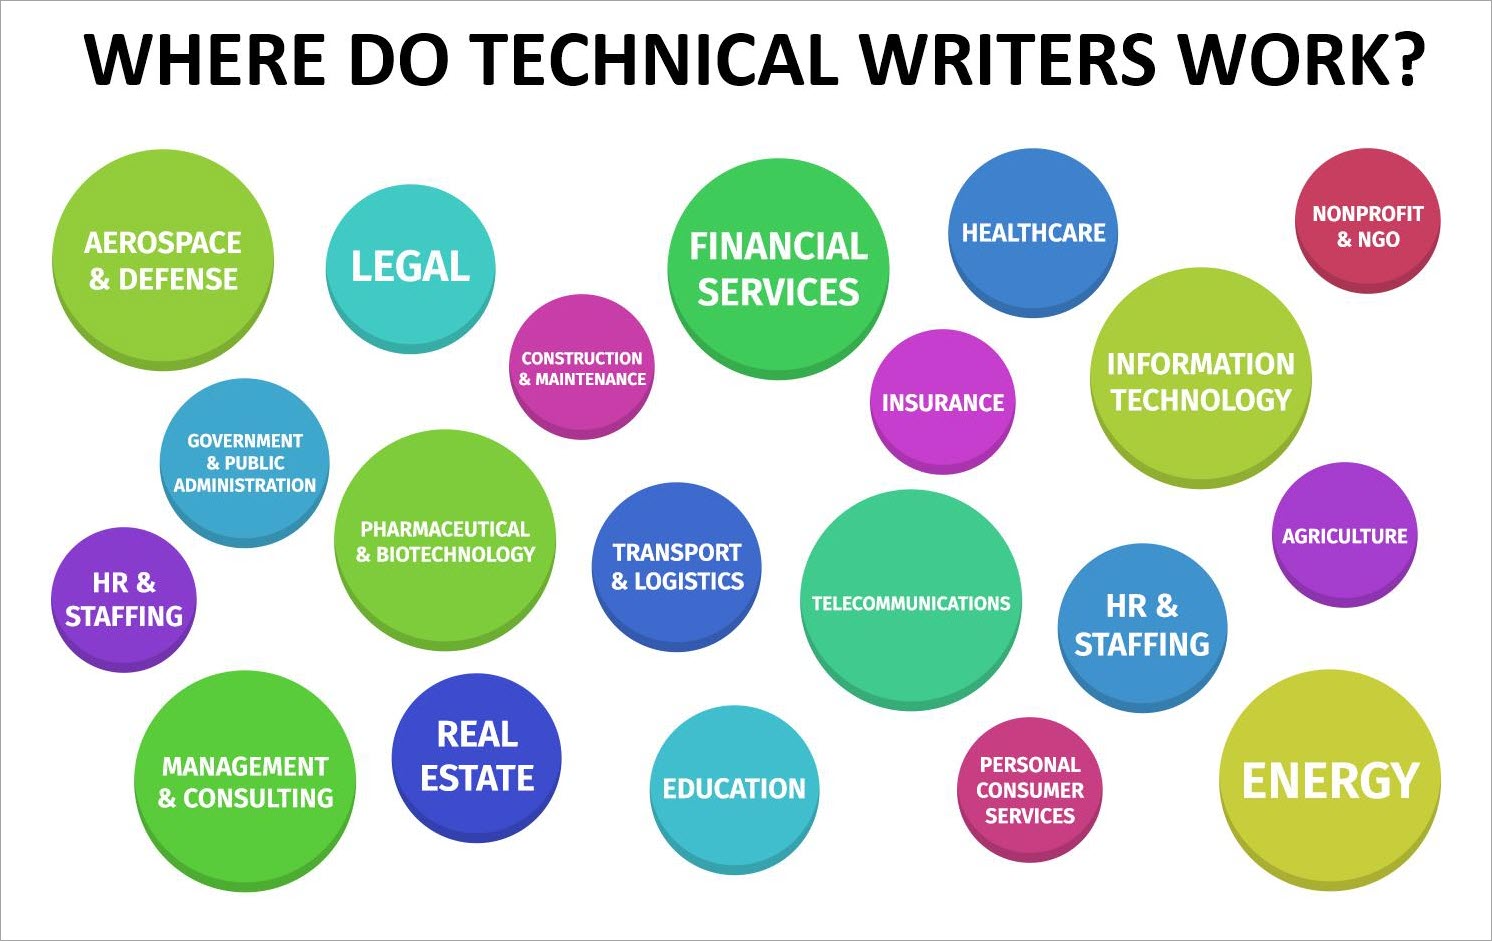 Where do technical writers work